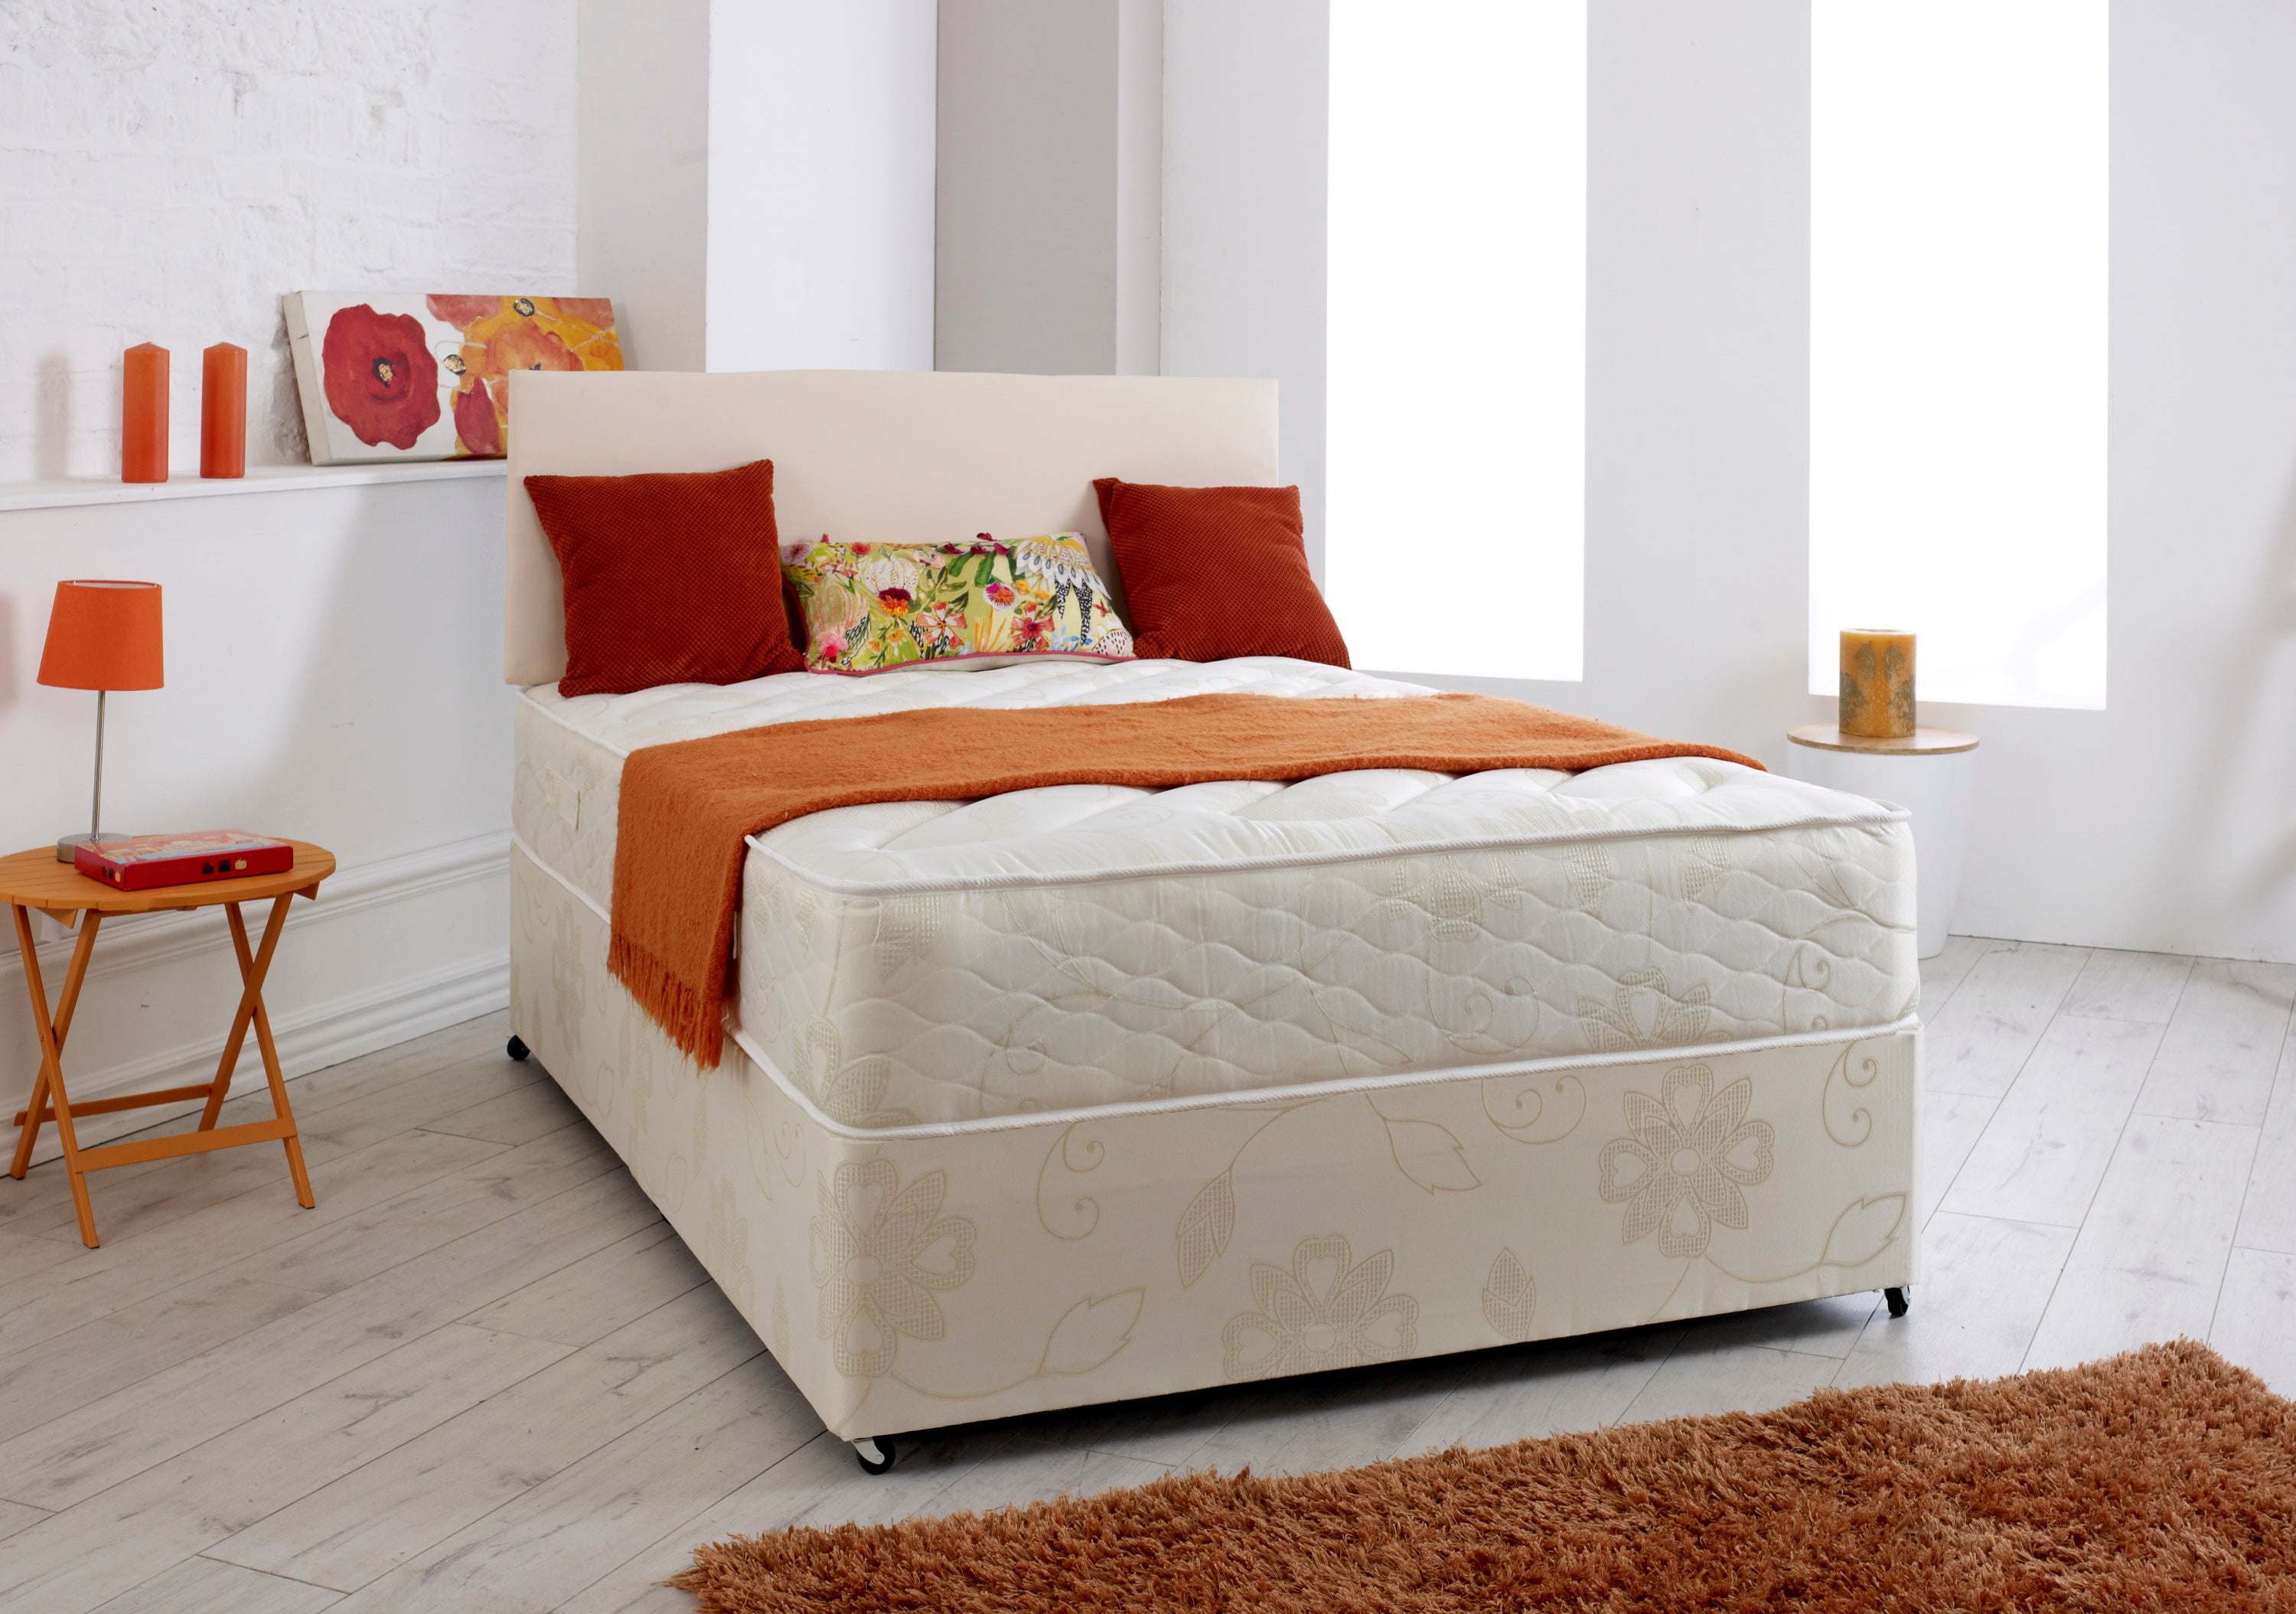 Dorset Divan Bed Set With Orthopaedic Medium Firm Mattress And Headboard